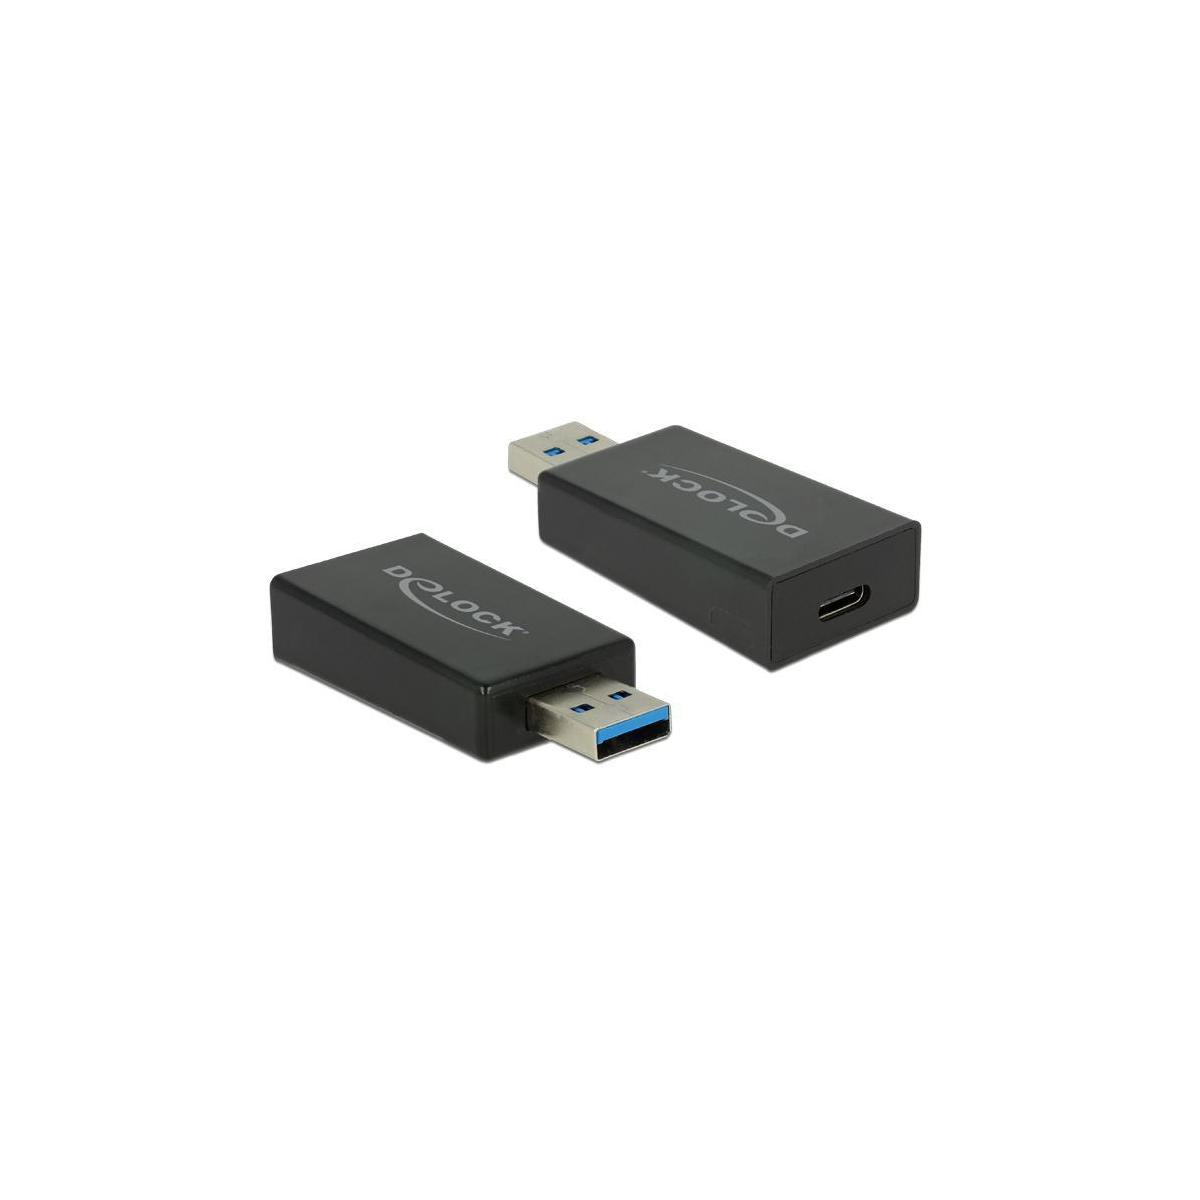 DELOCK DELOCK Adapter USB Zubehör USB & Peripheriegeräte Schwarz Kabel Adapter, <gt/> Type-C 3.0 & & A